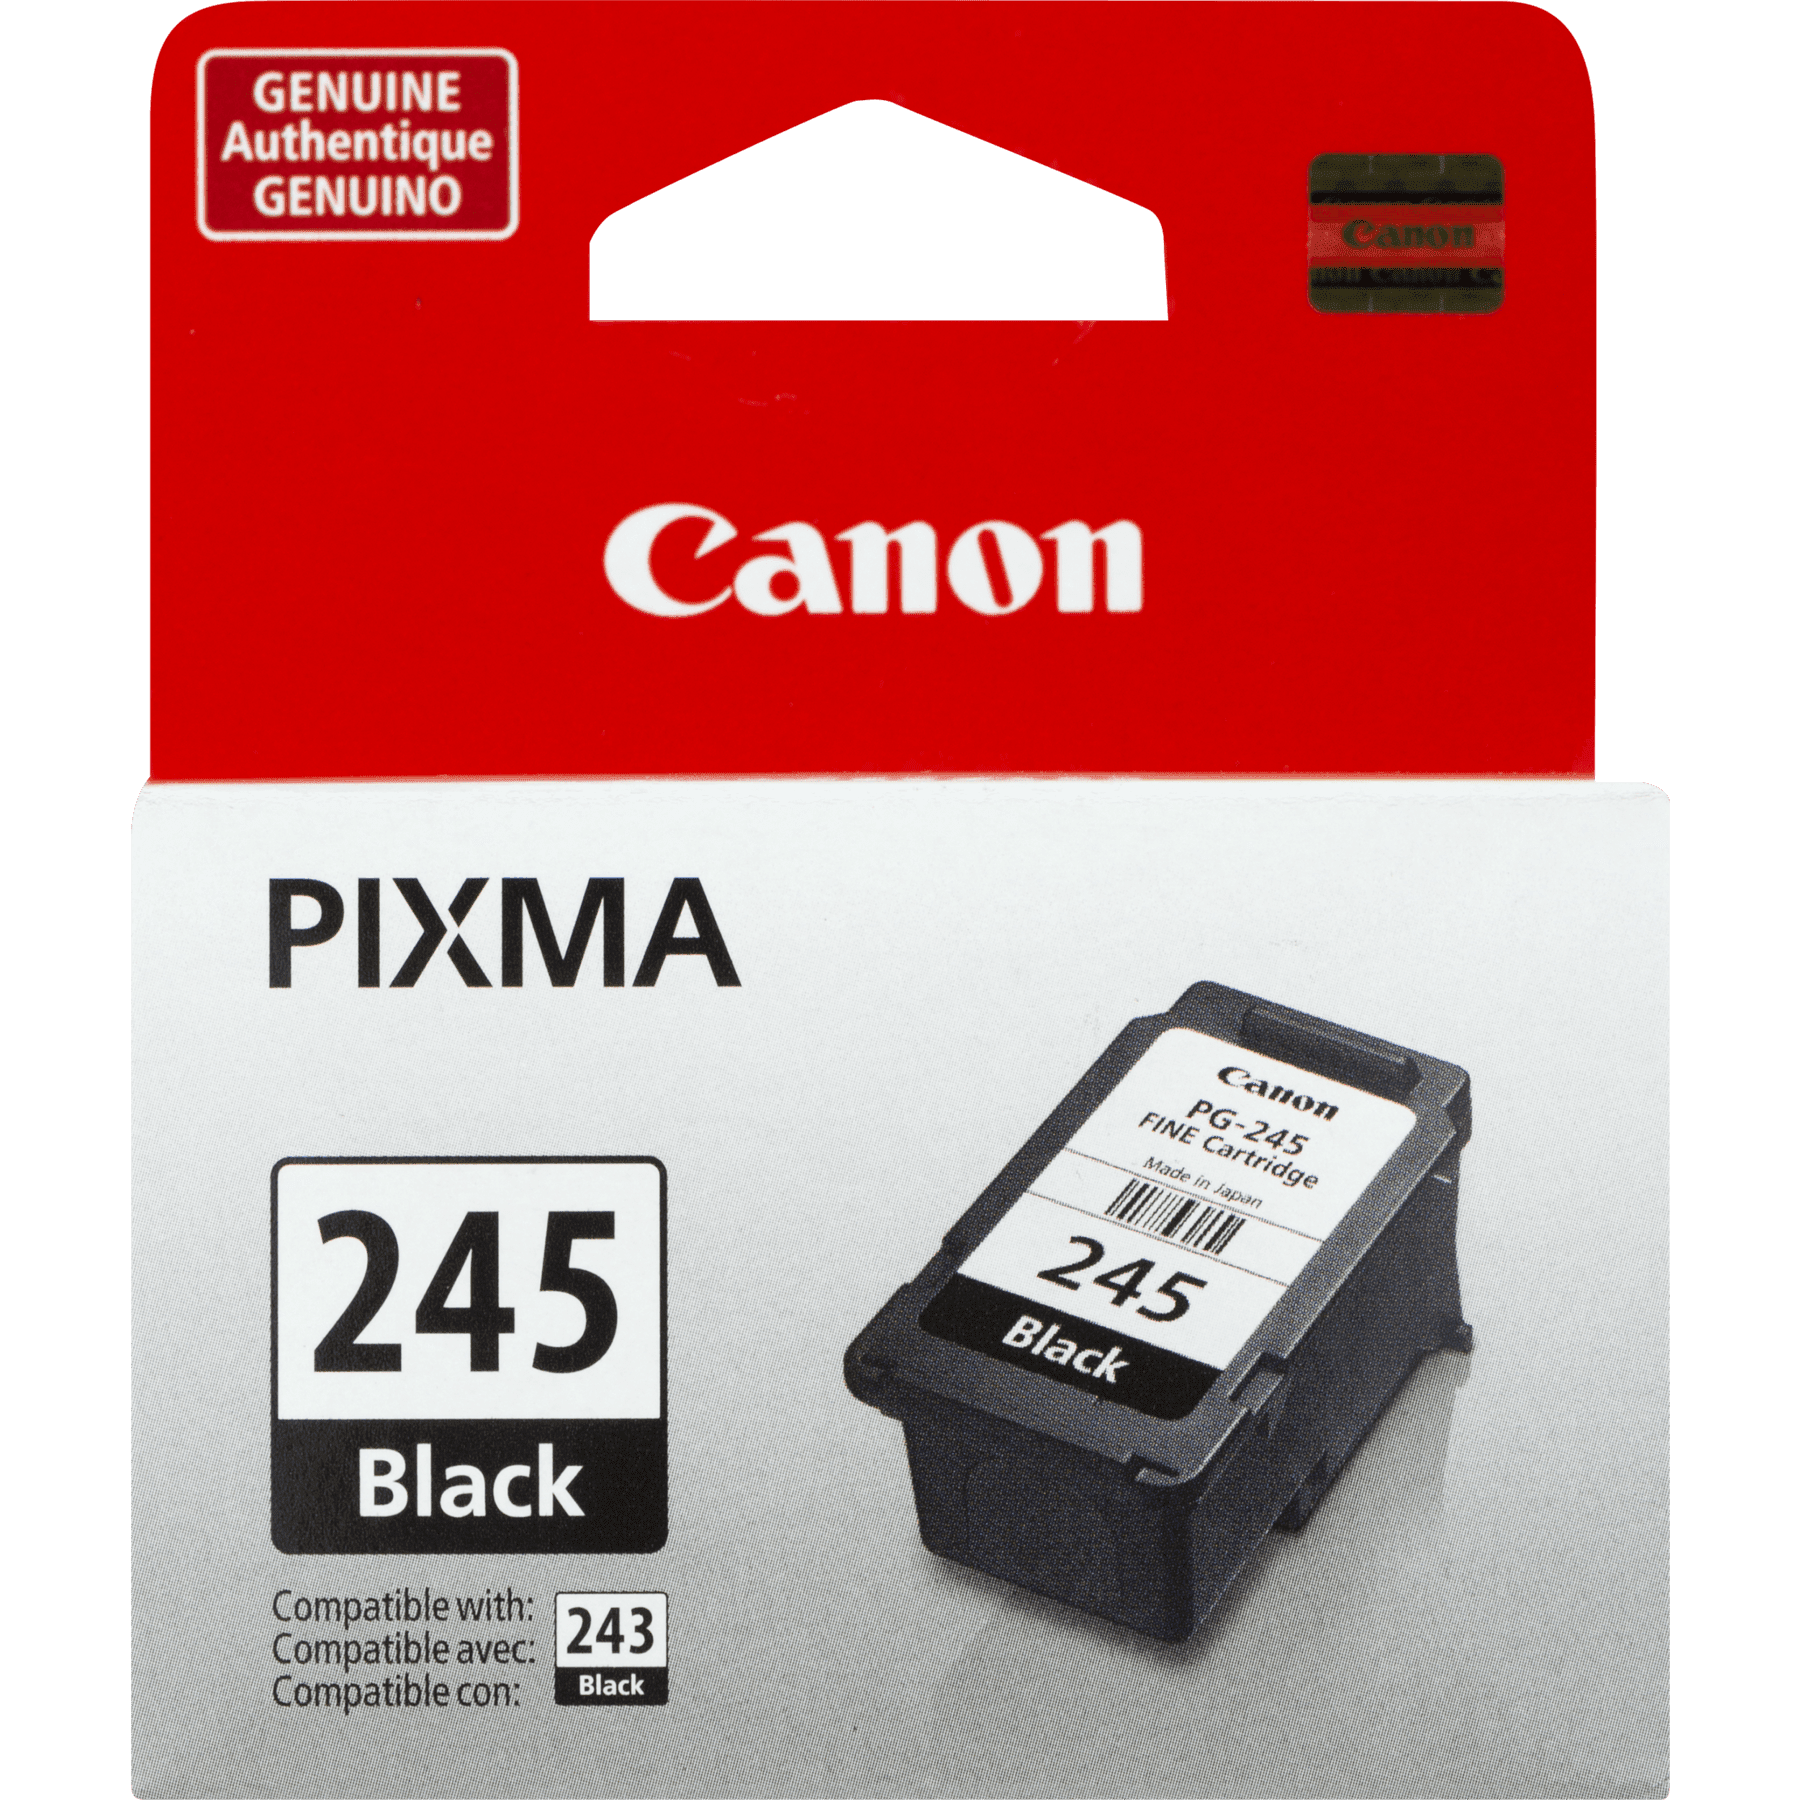 PG-245 Black Printer Cartridge - Walmart.com